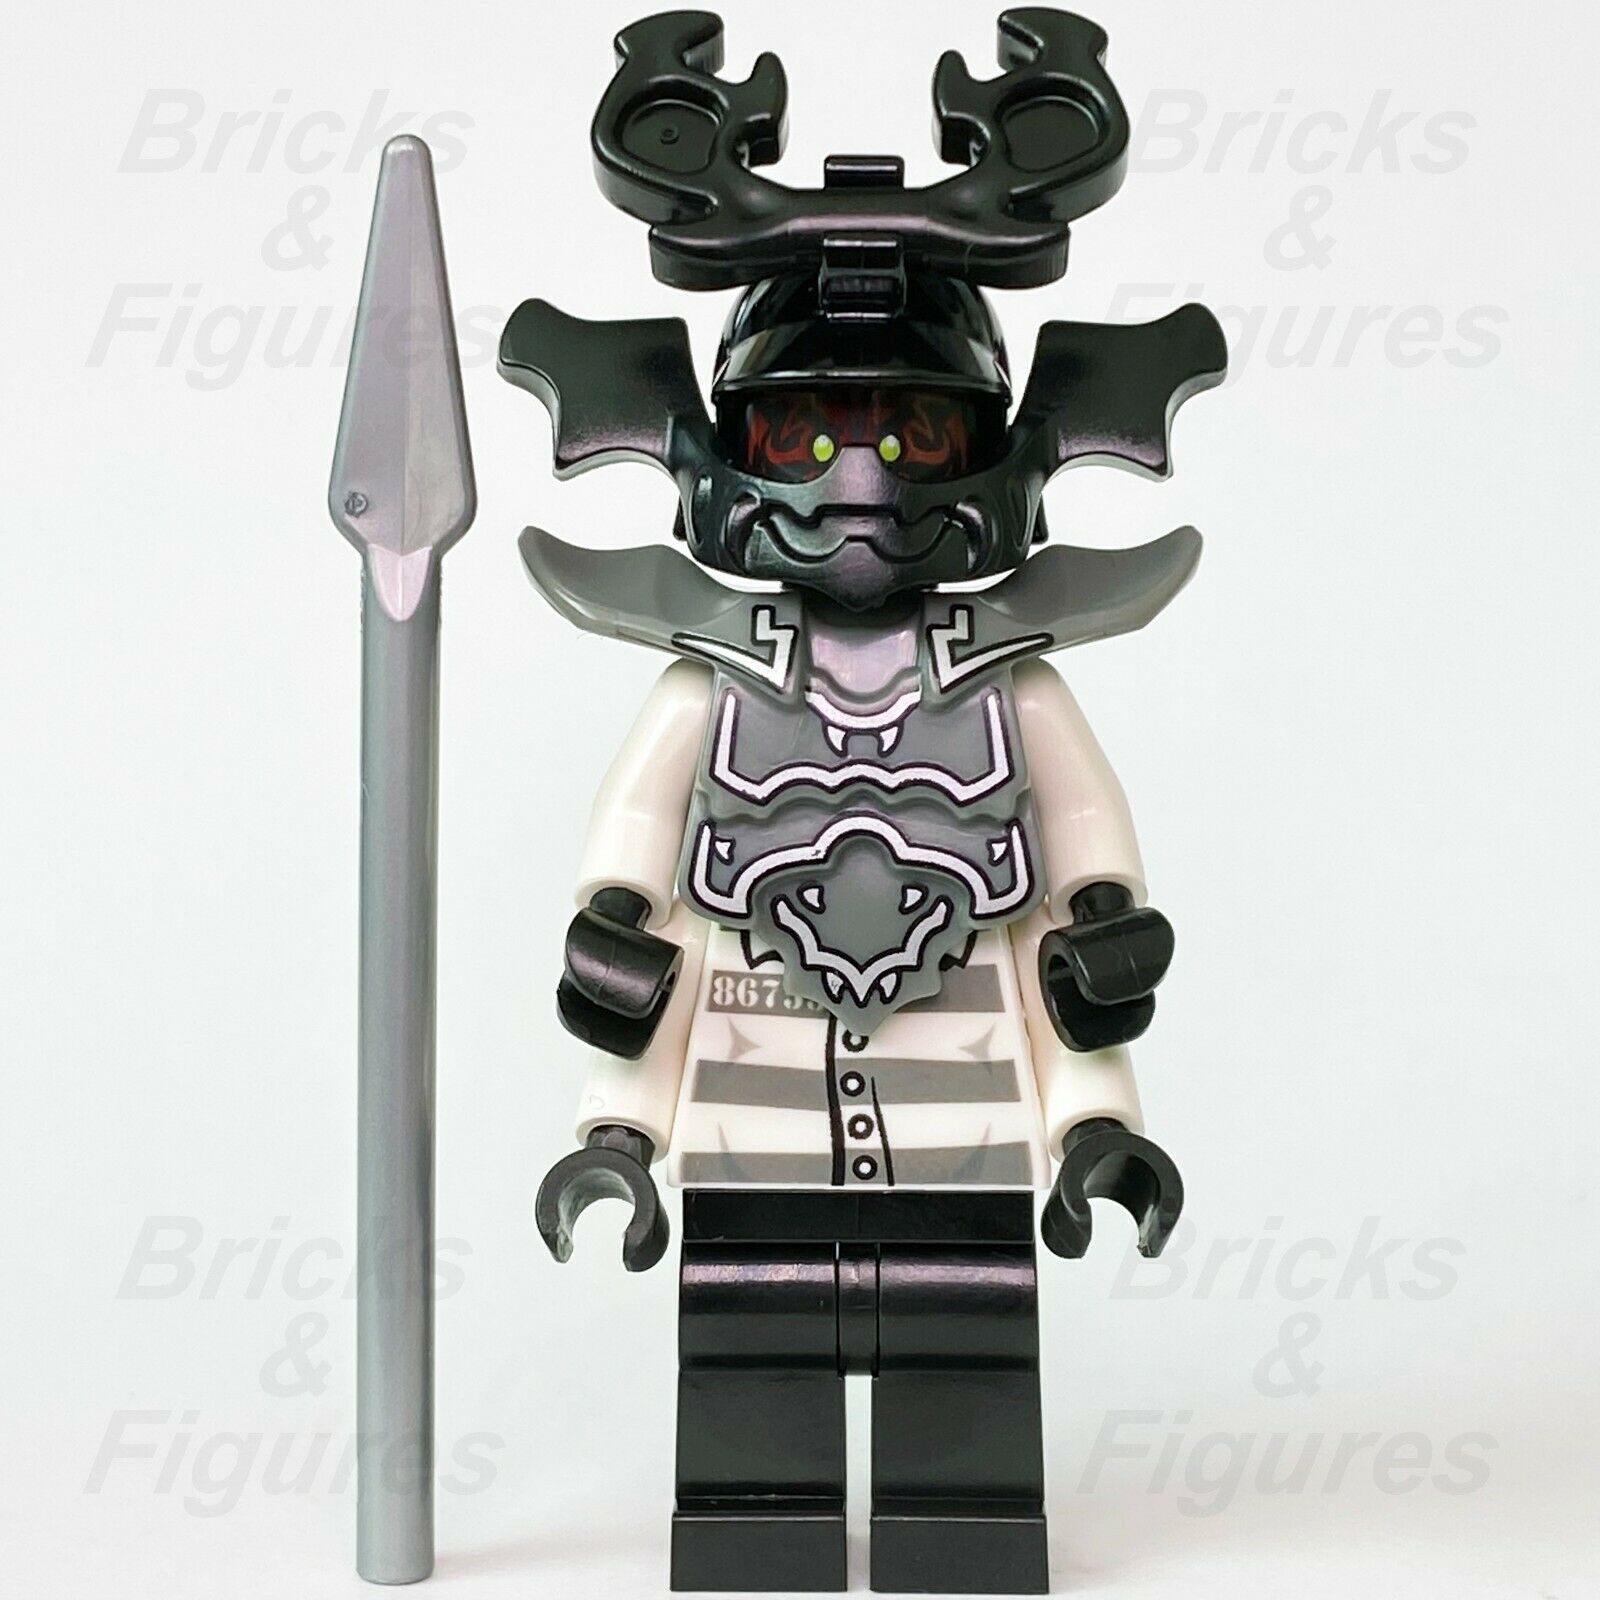 New Ninjago LEGO Giant Stone Army Warrior with Spear Skybound Minifigure 70591 - Bricks & Figures